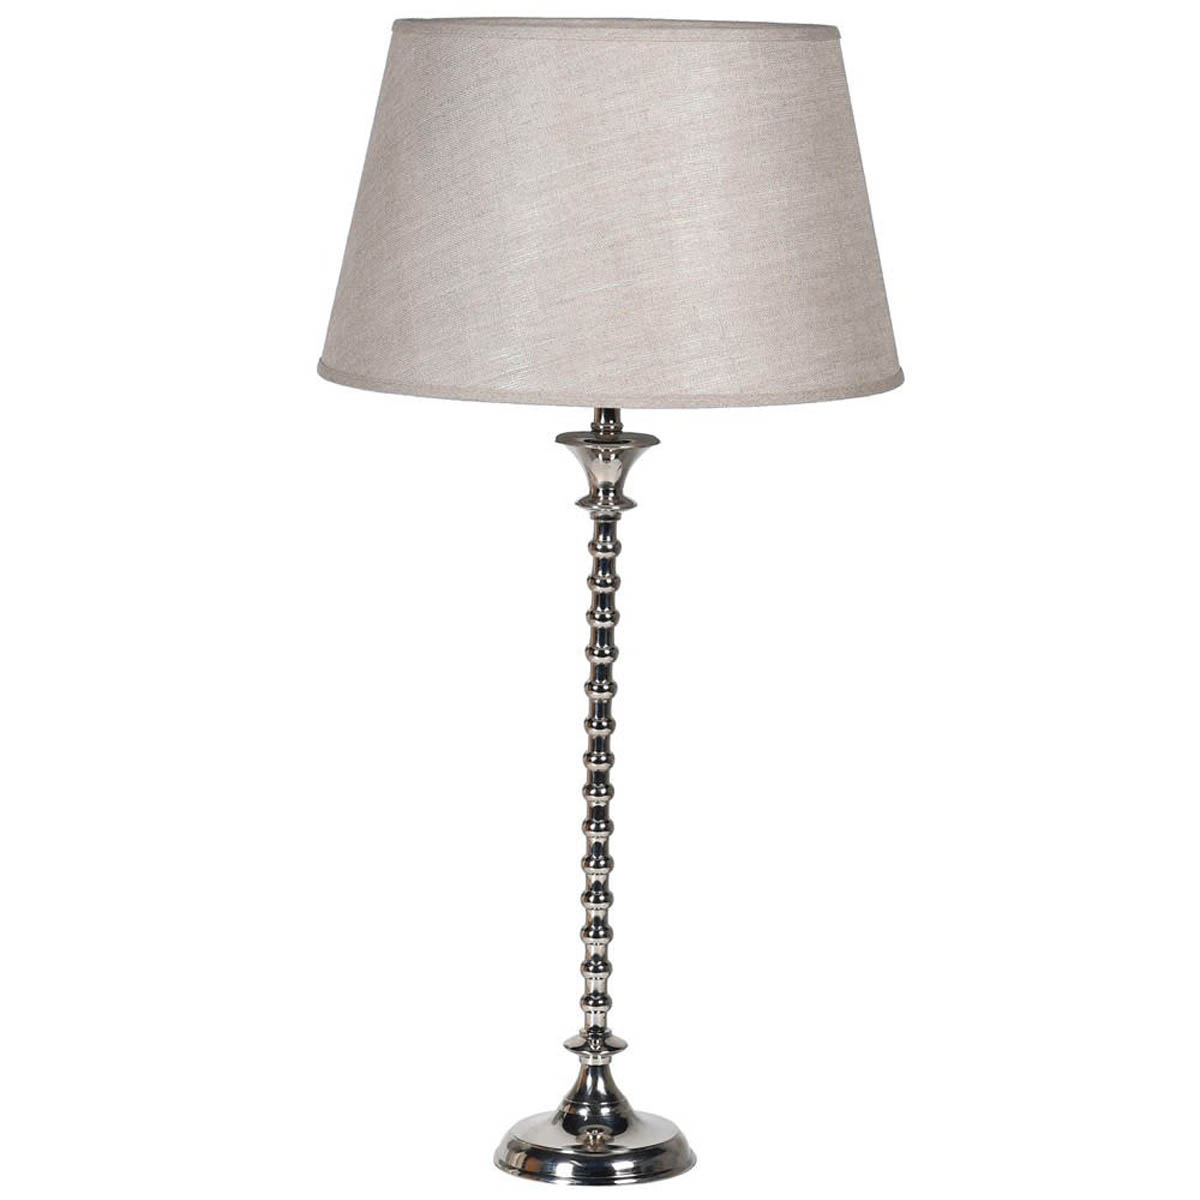 Tall Slim Silver Table Lamp Interior, Tall Silver Table Lamp Base